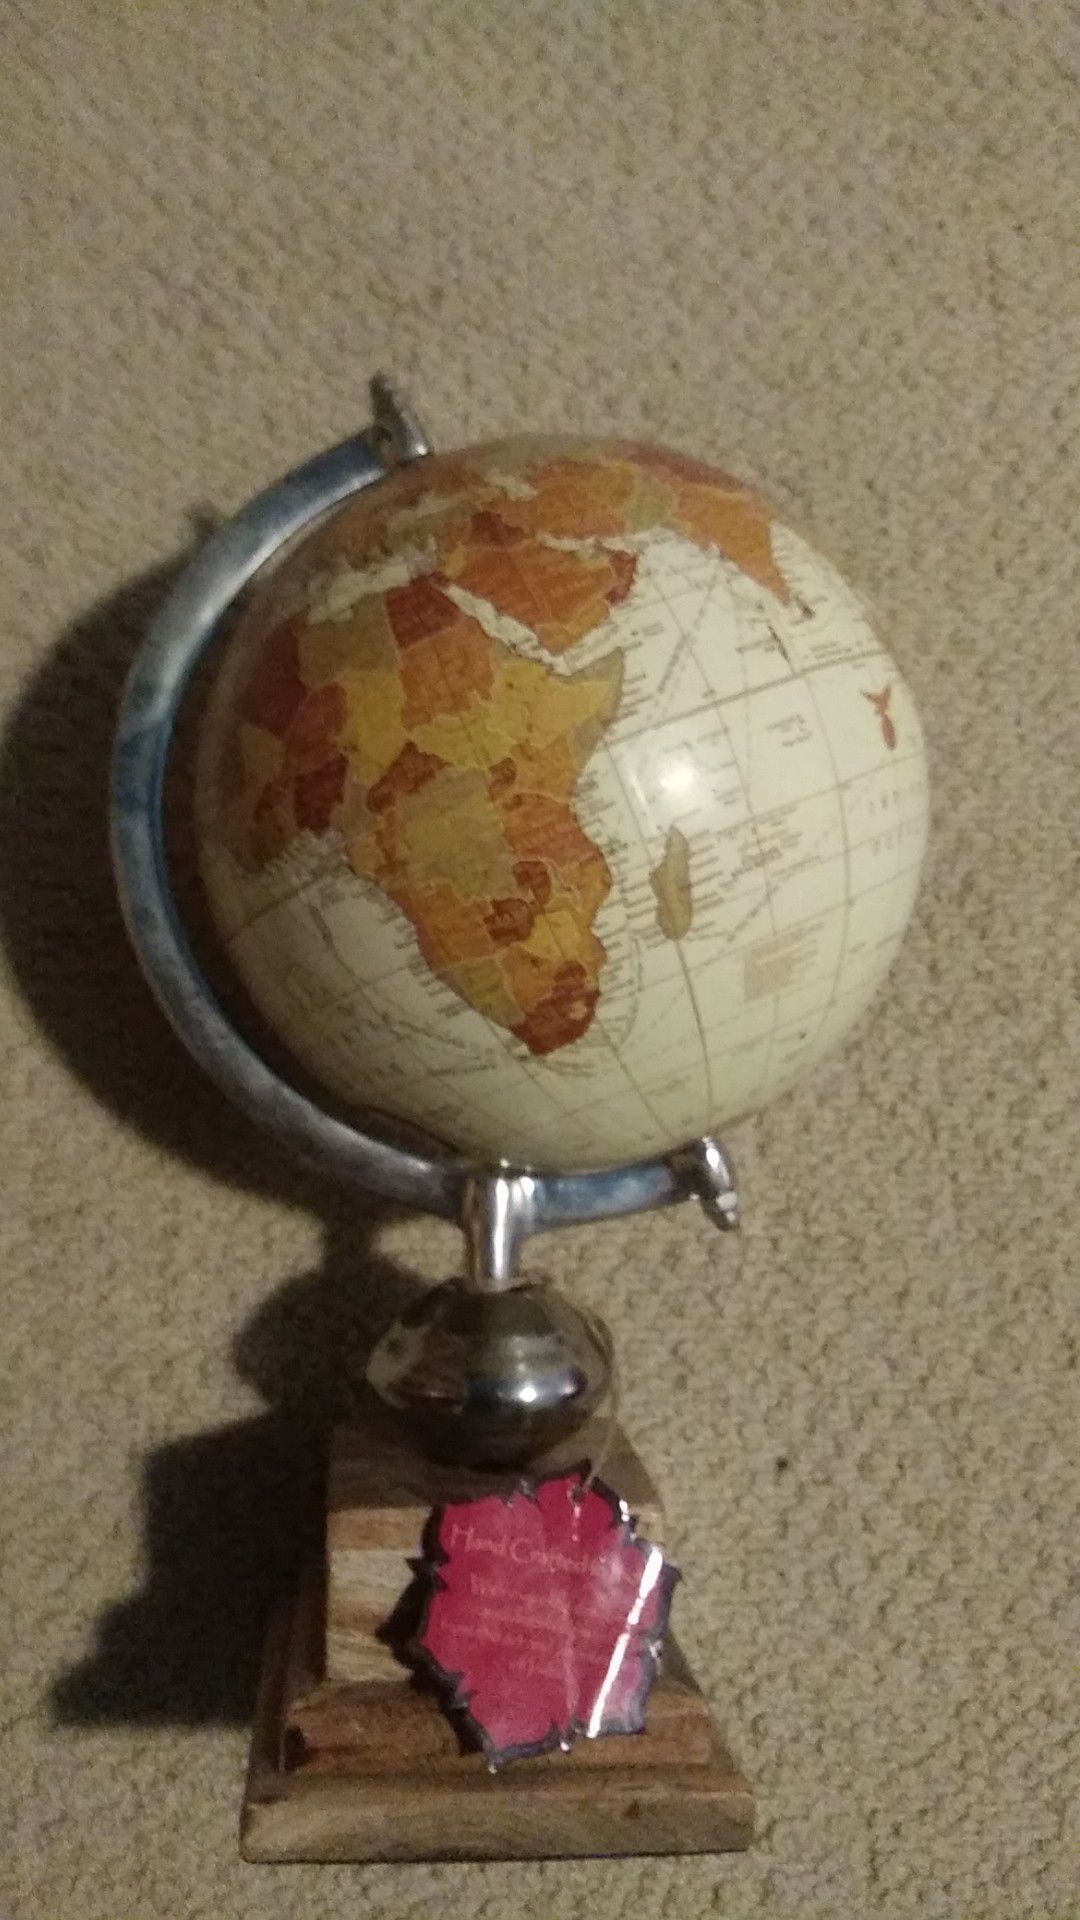 Indian rotating earth globe